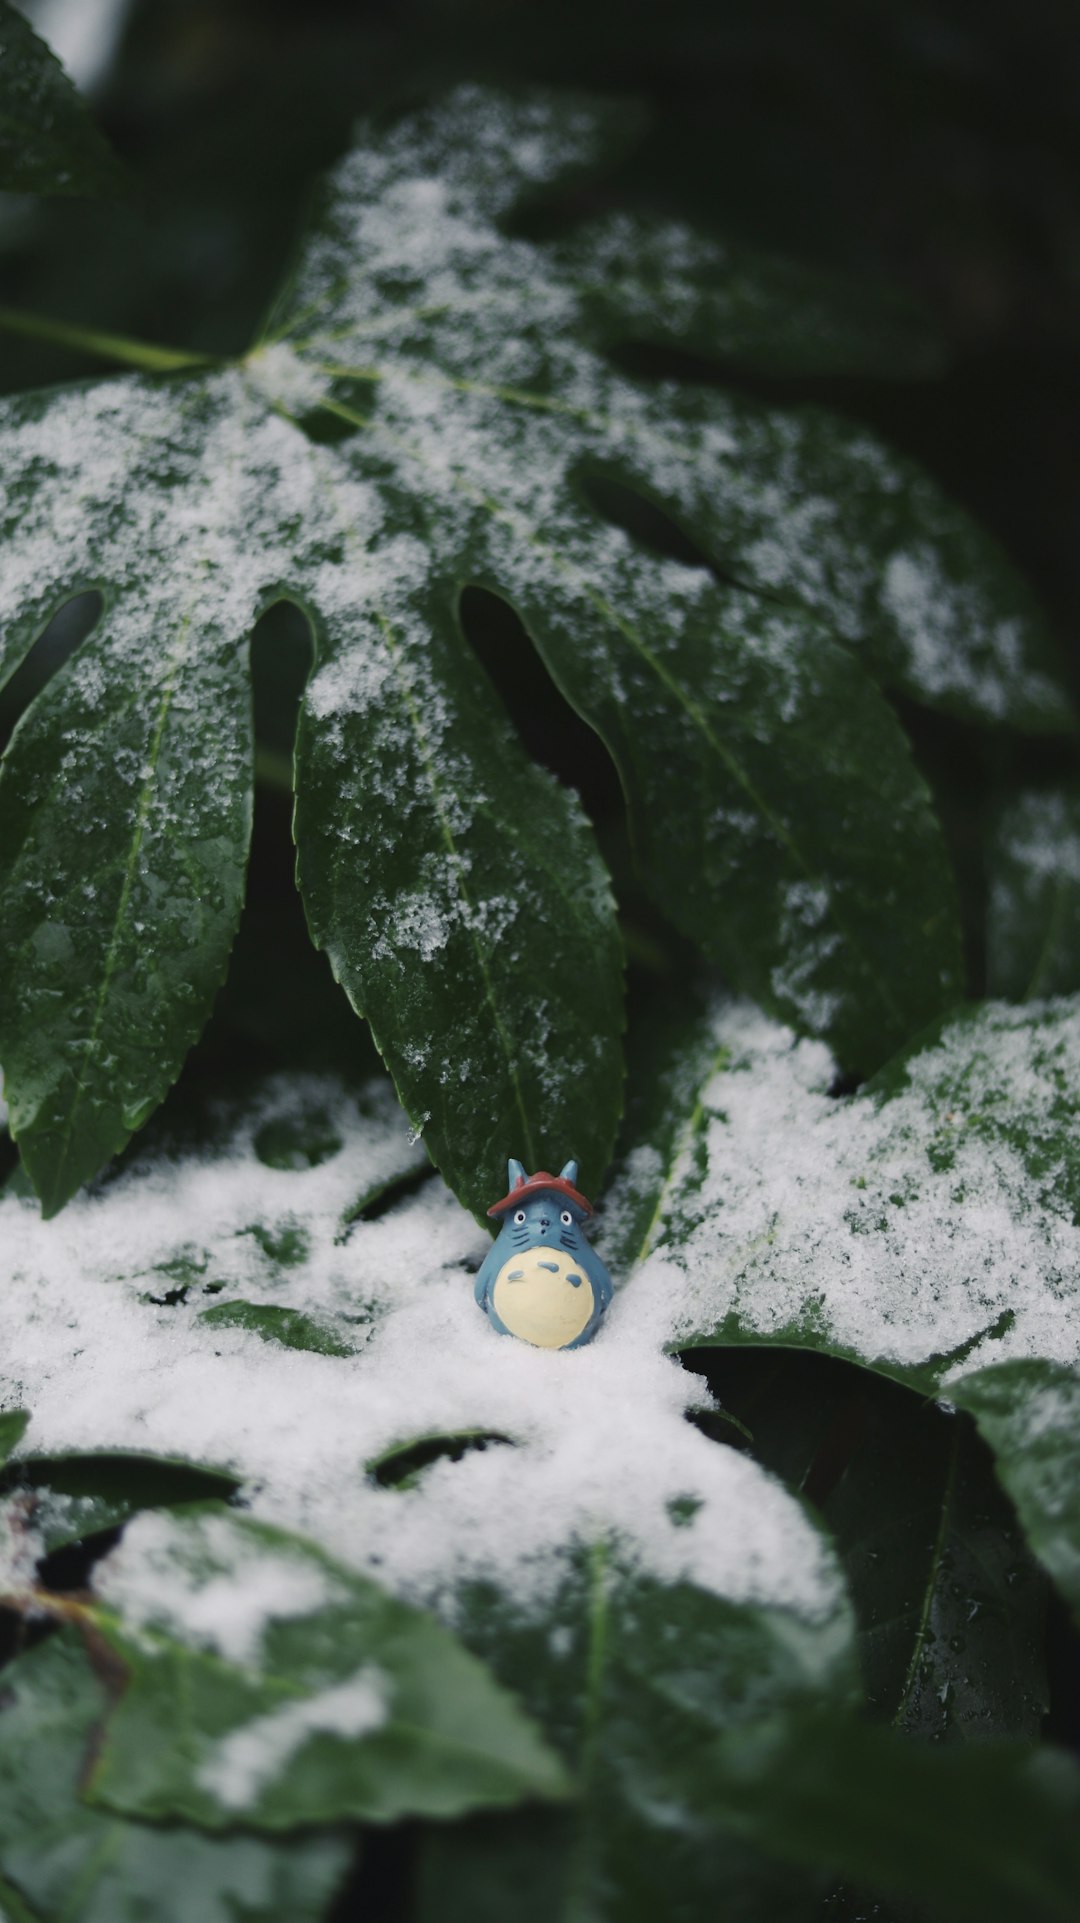 Totoro plastic toy on green leaf